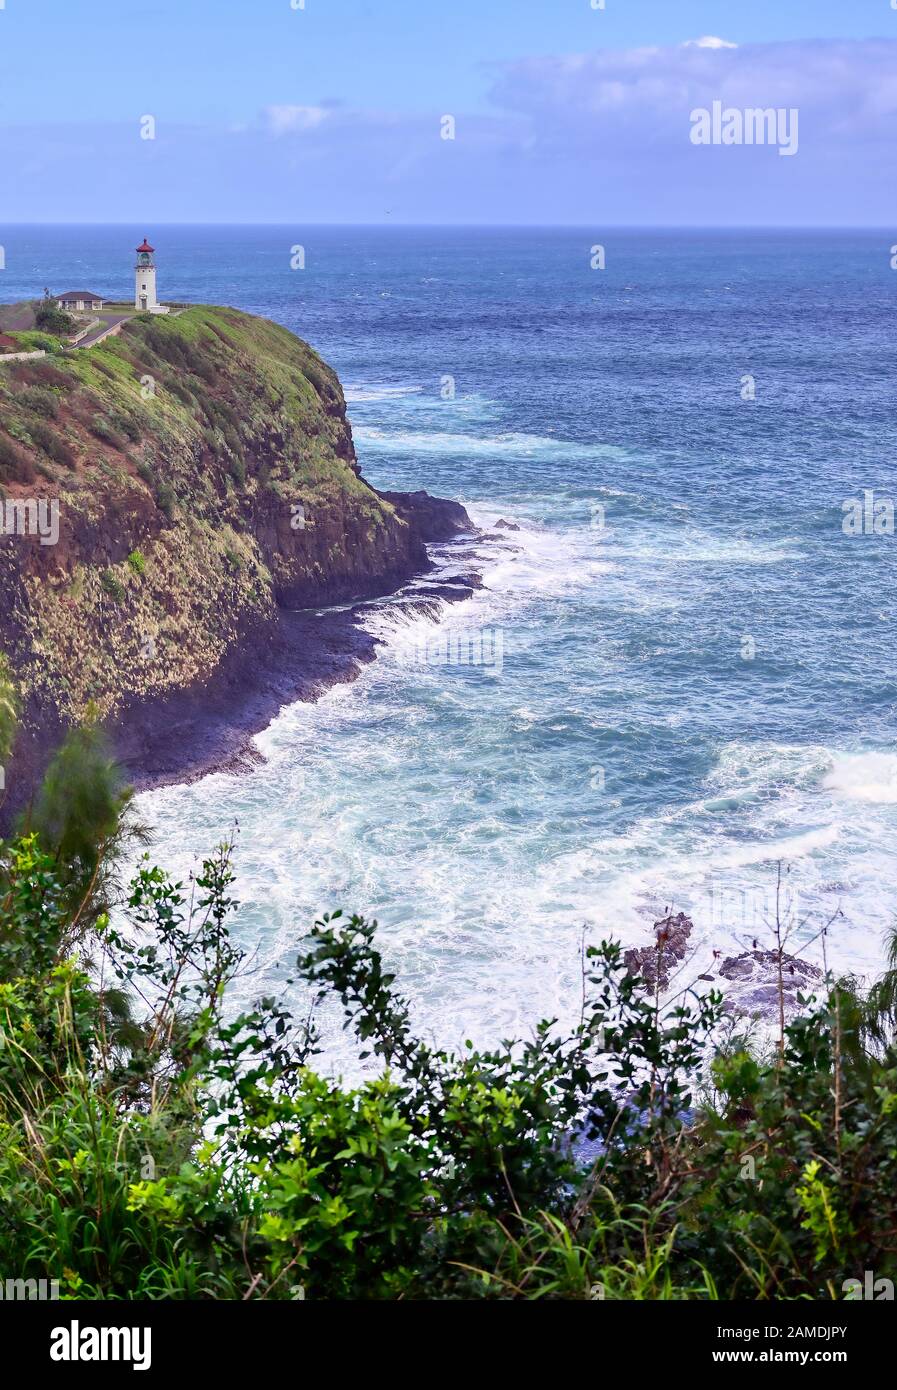 The Kilauea Lighthouse on the coast of Kauai, Hawaii. Stock Photo